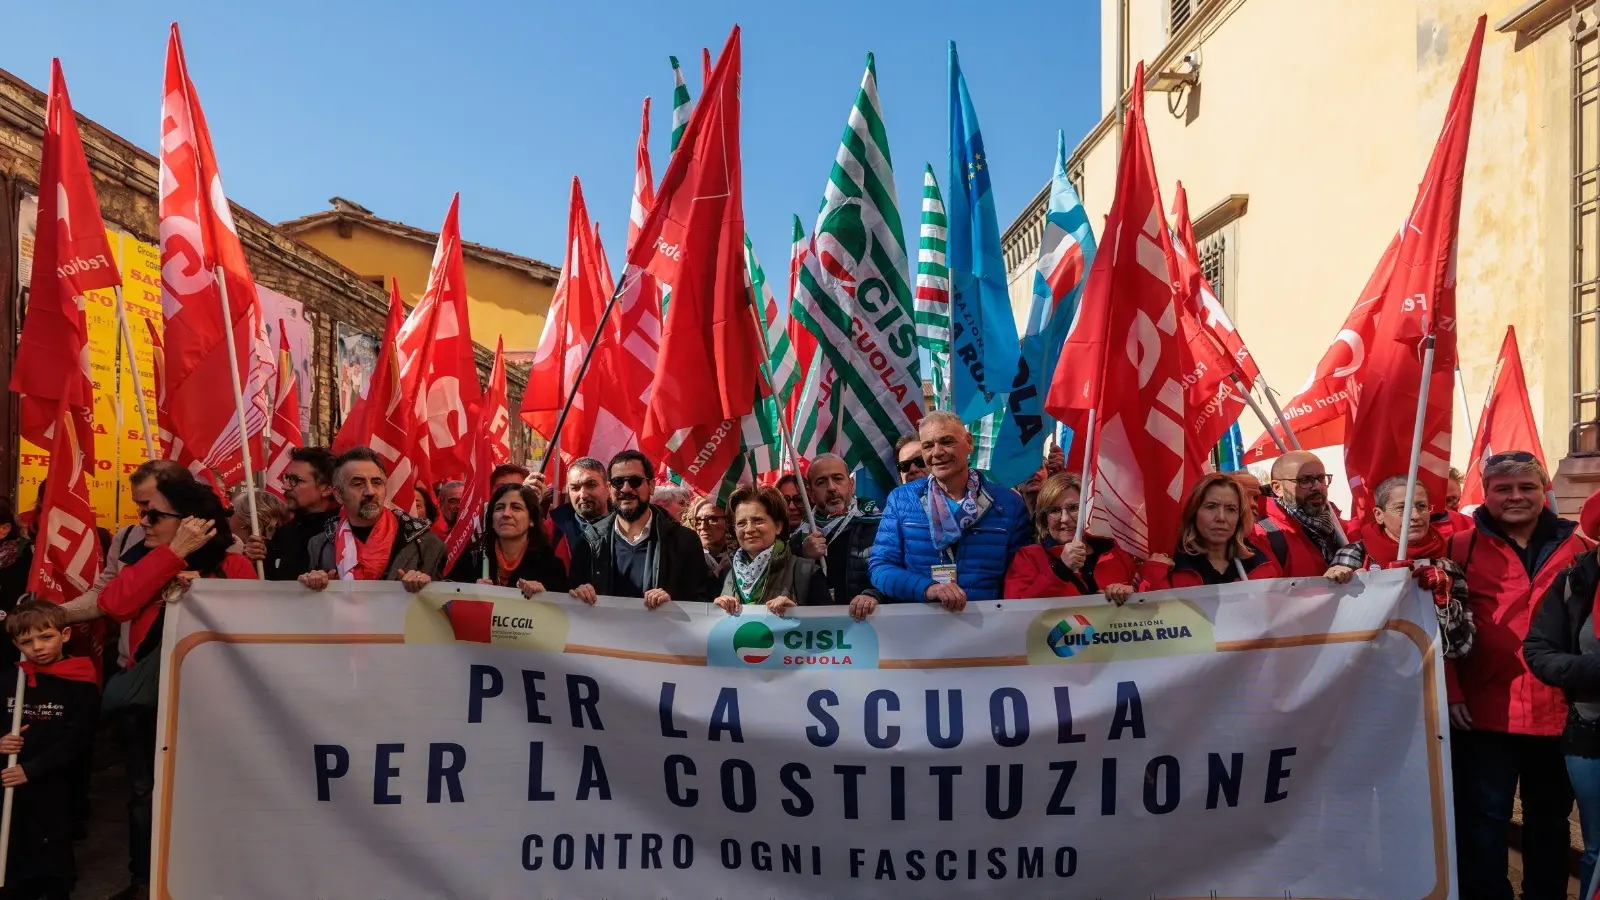 Da tutta Italia a Firenze per il grande corteo antifascista